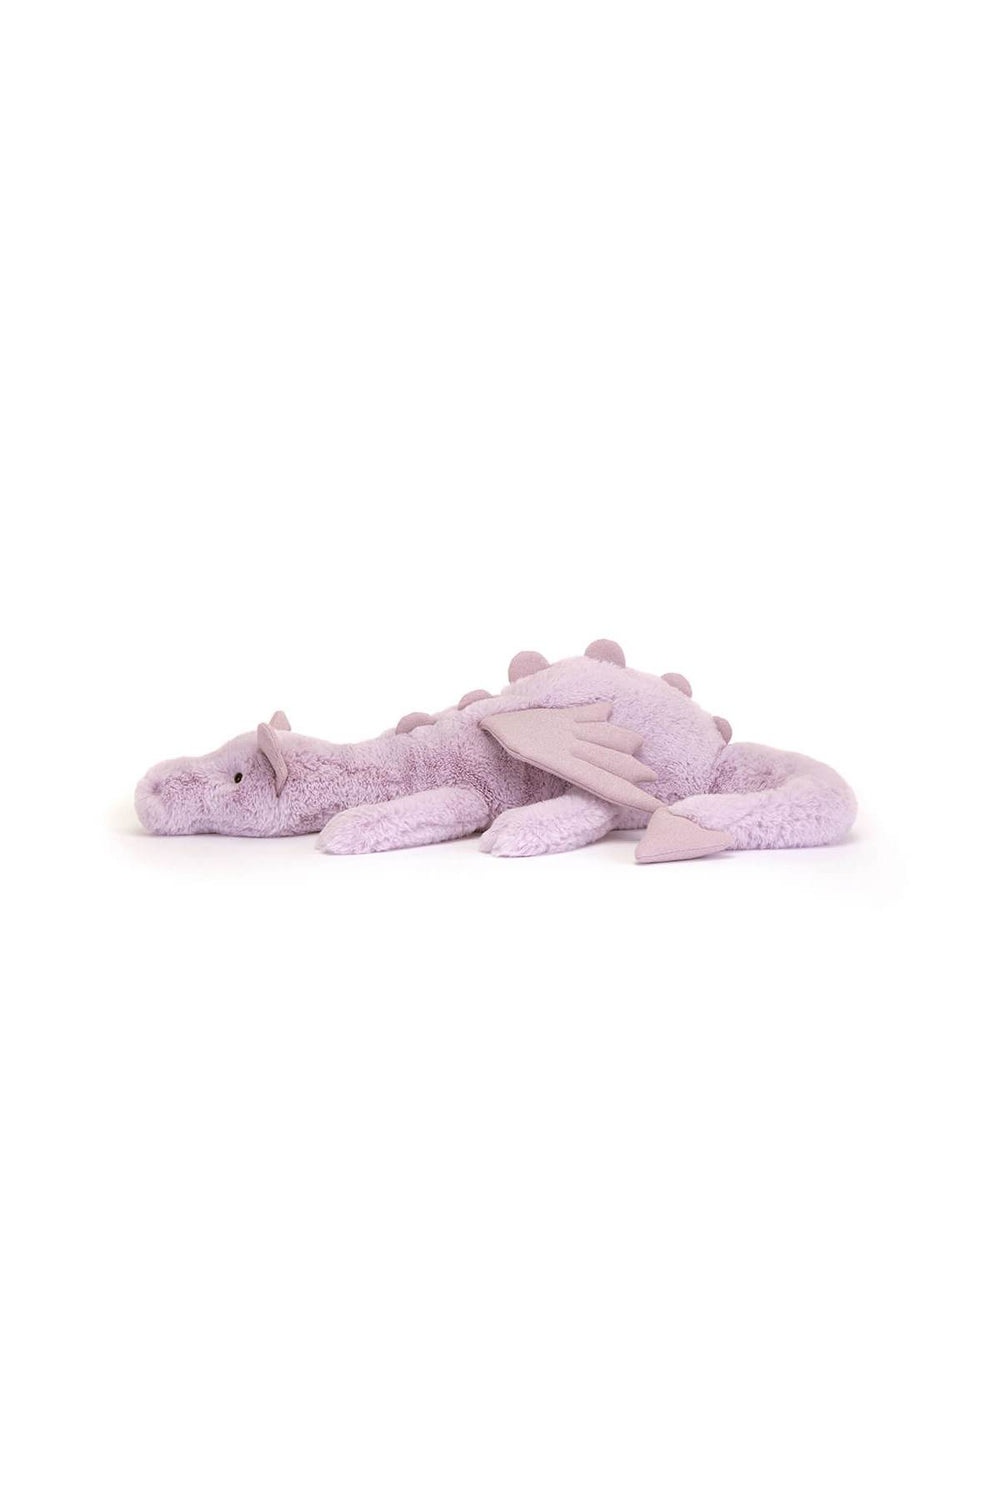 soft toy

lavender dragon-1